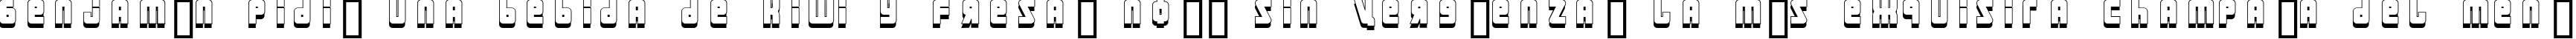 Пример написания шрифтом URAL 3d текста на испанском